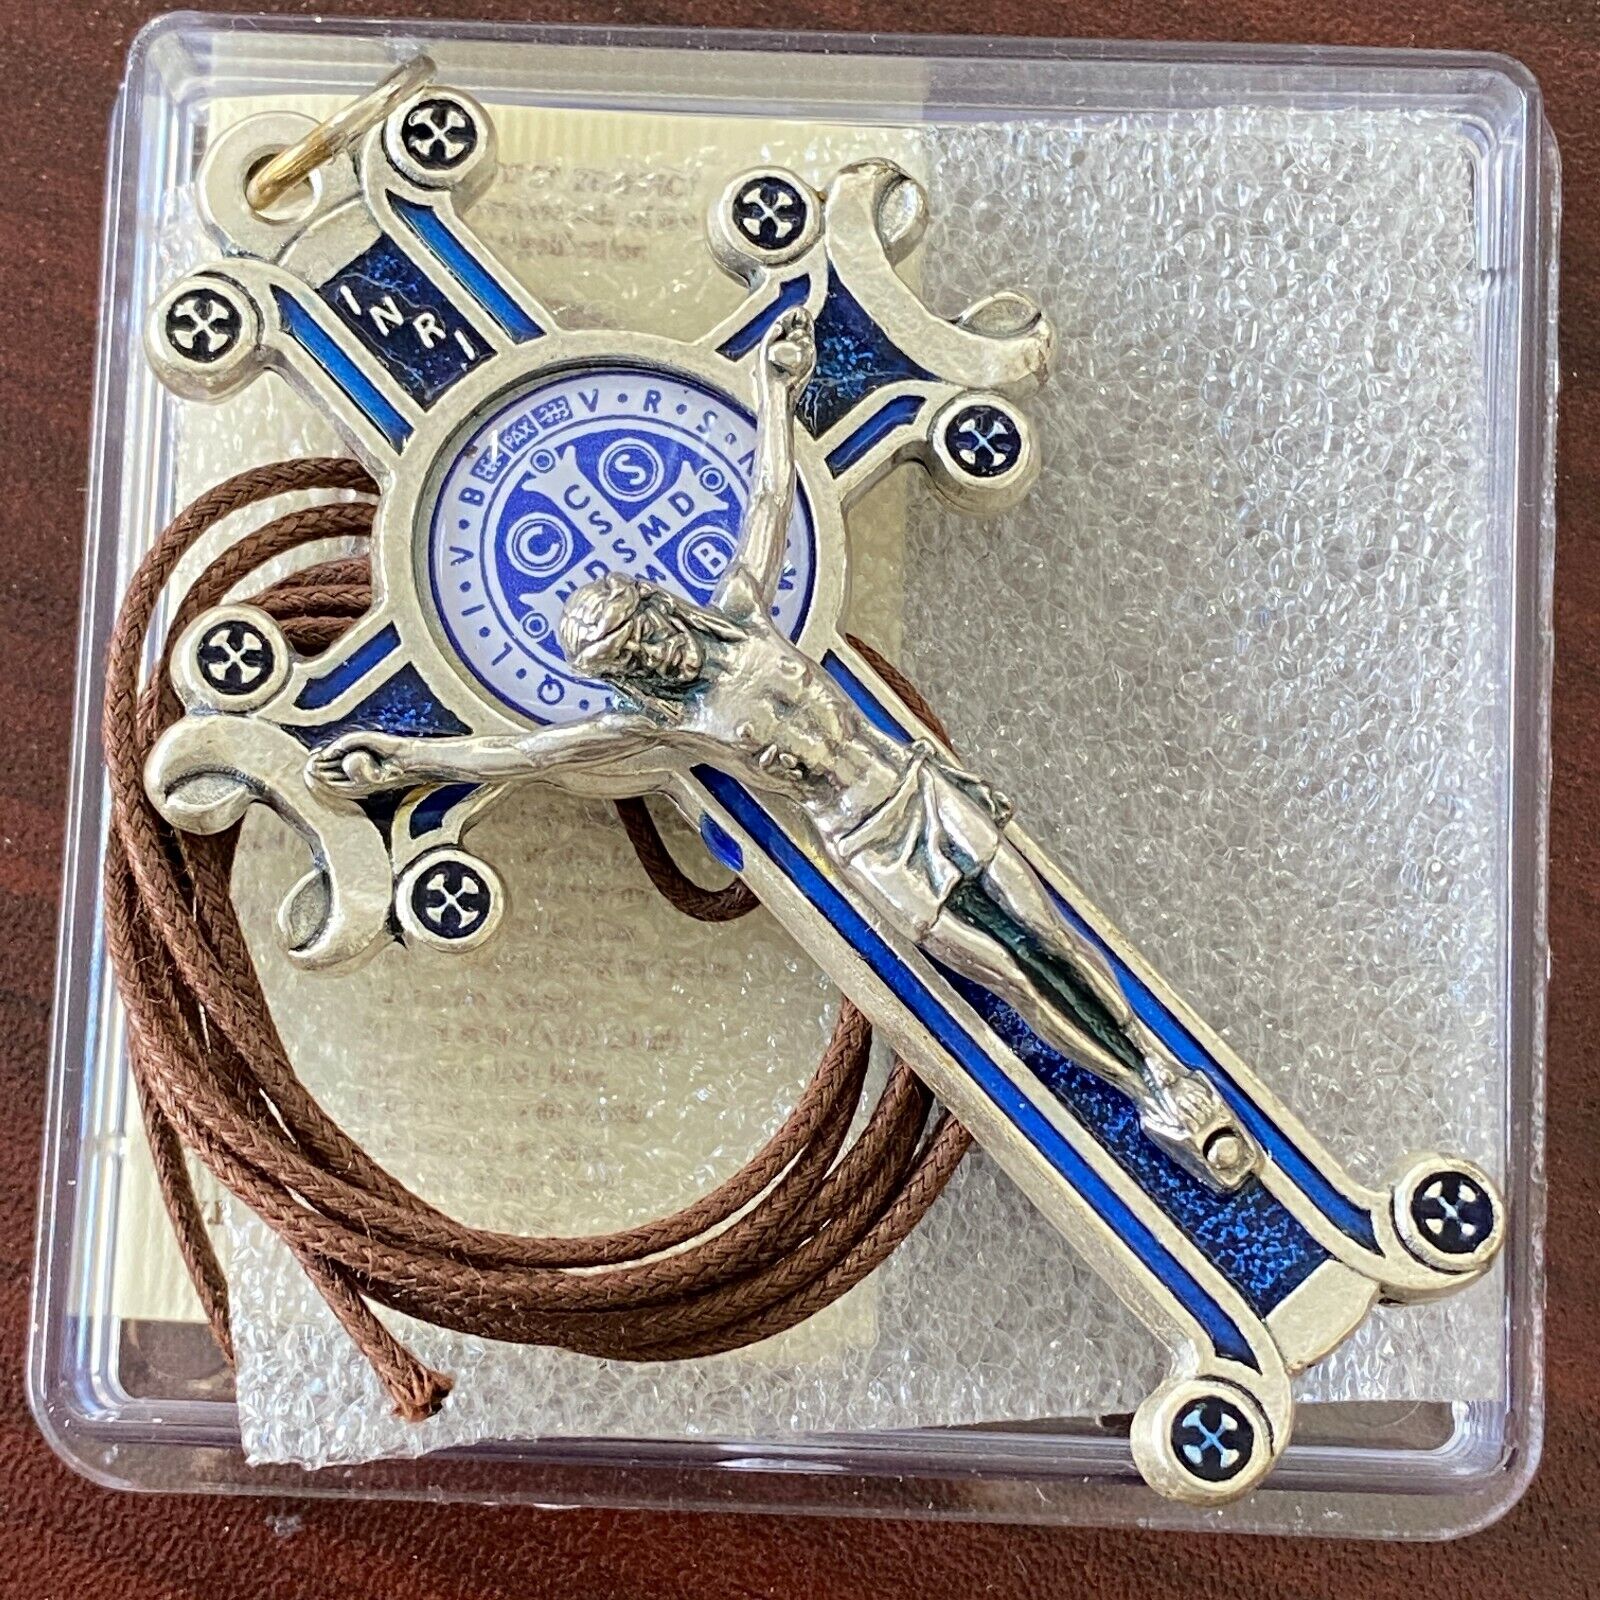 Big 3 inch St Benedict Crucifix Pendant Silver Blue Enamel Cross Charm Necklace